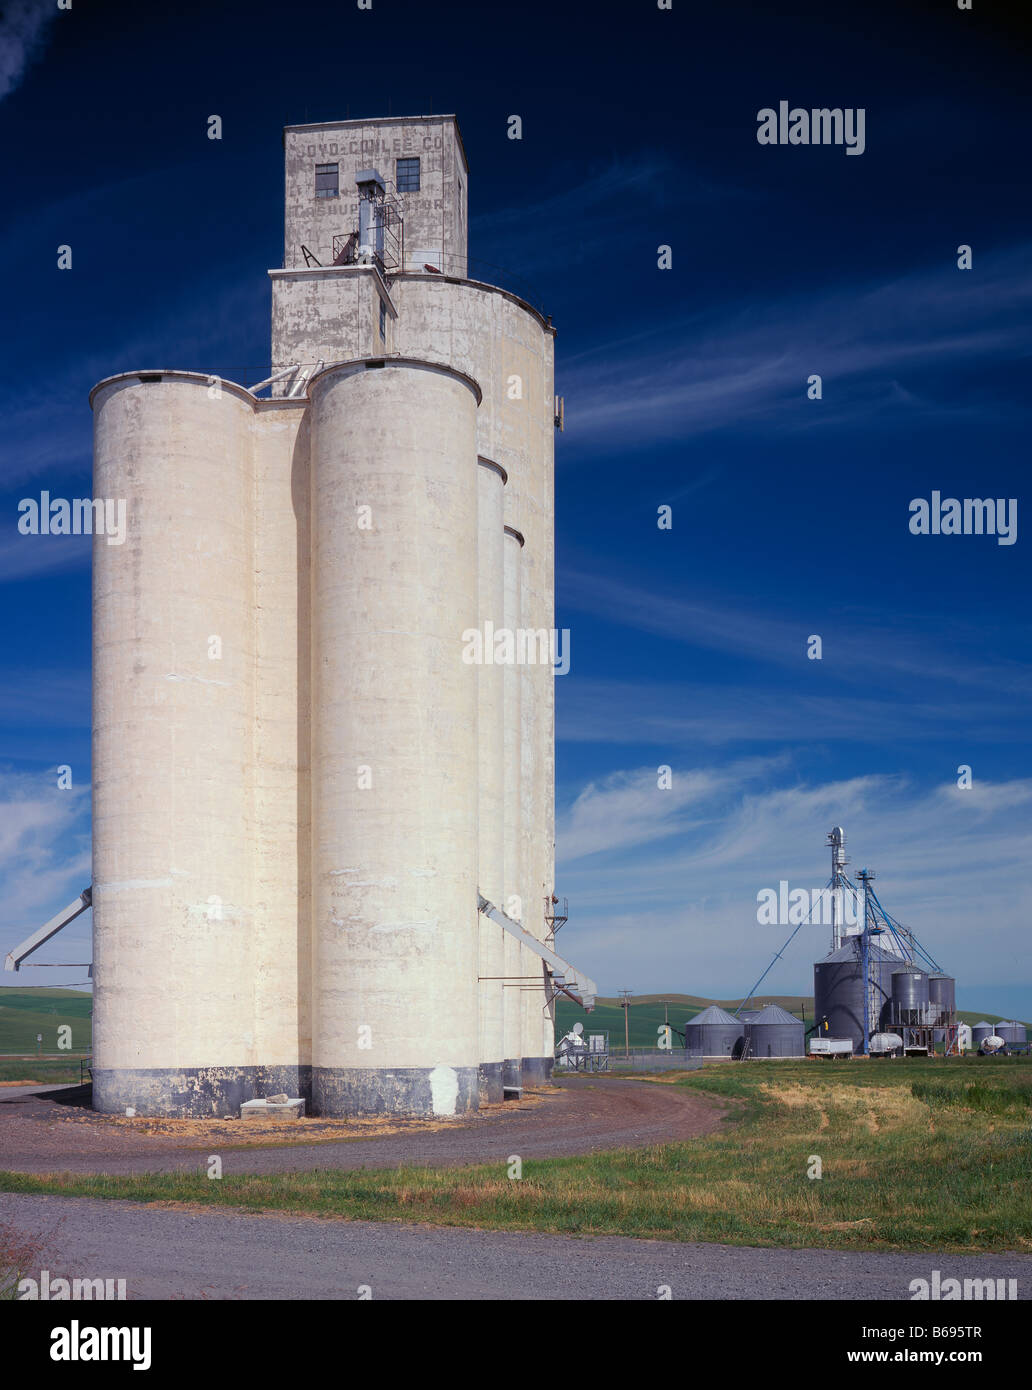 WASHINGTON - Grain silos in farm fields near the town of Steptoe in the Palouse area. Stock Photo